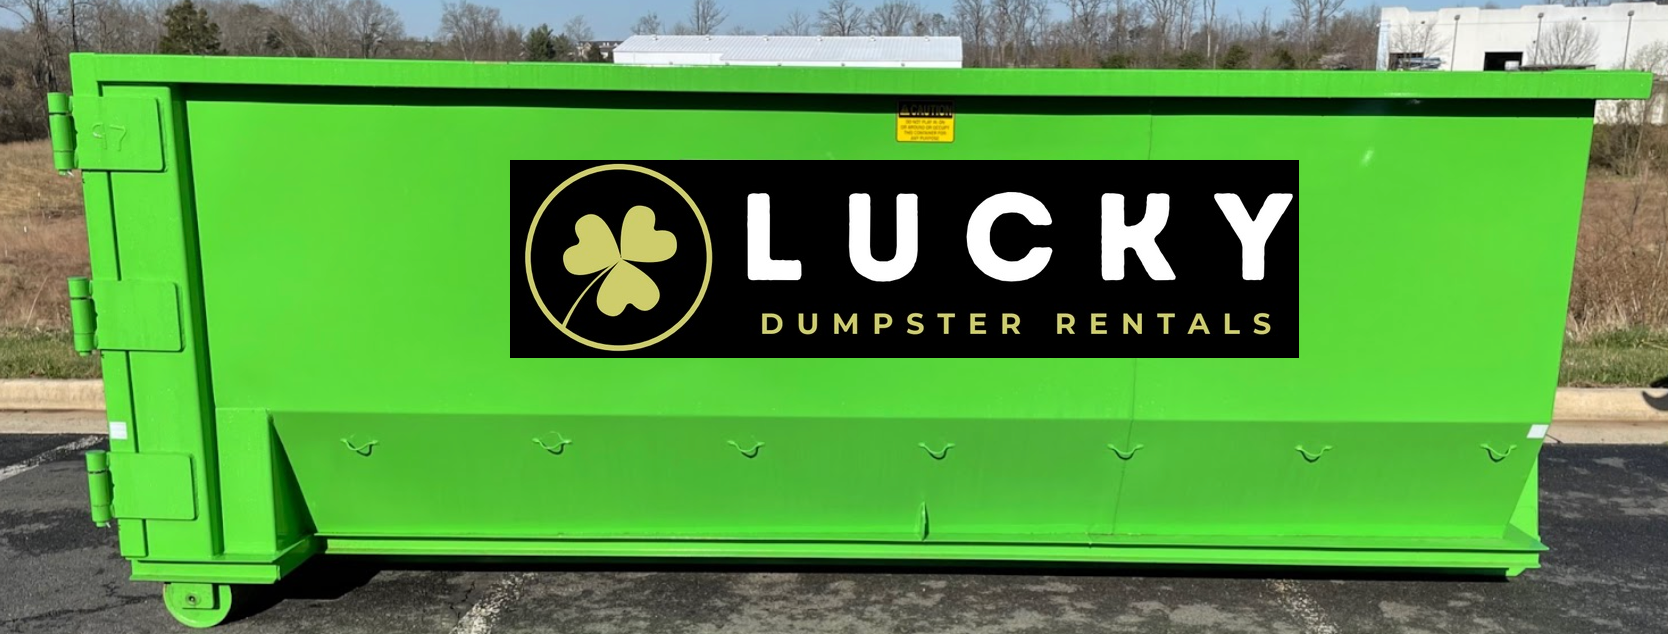 Union City Dumpster Rentals - Lucky Dumpster of Union City